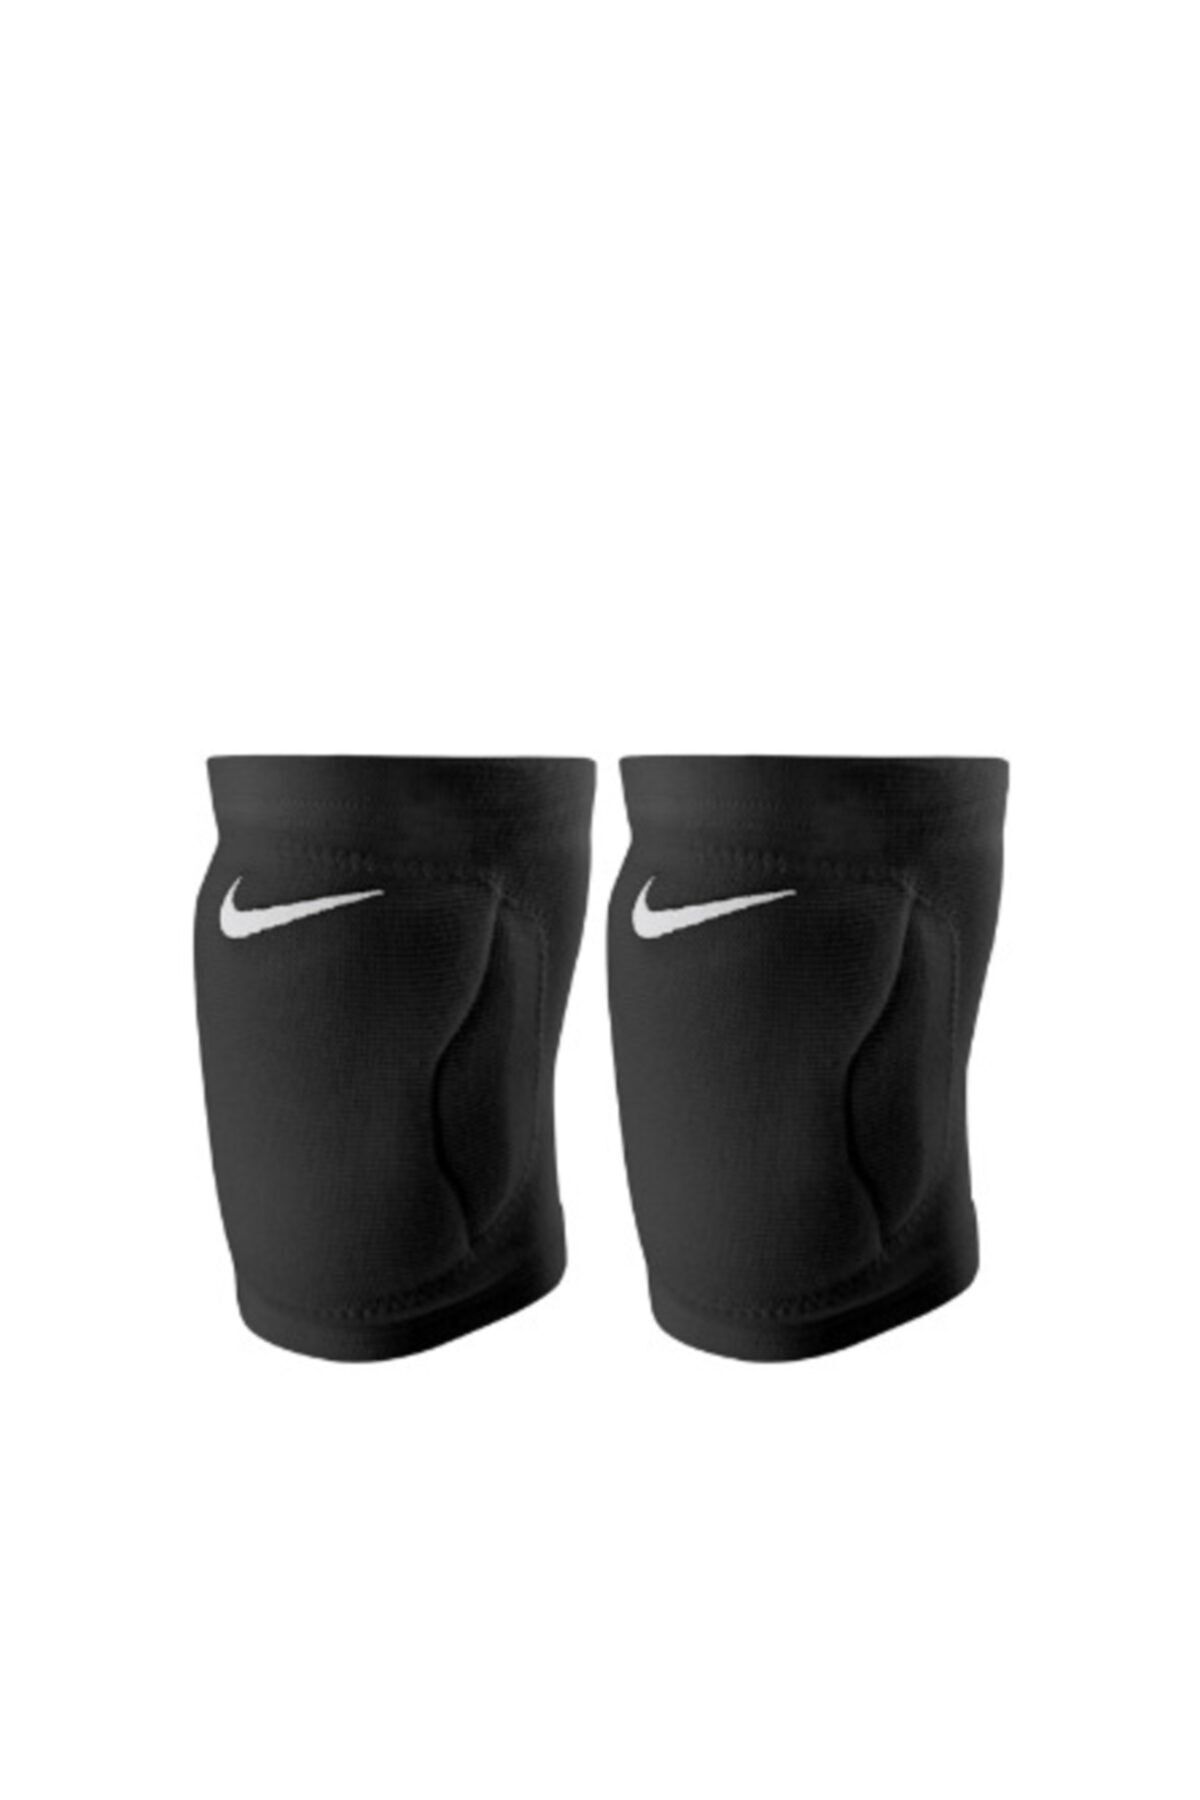 Nike Streak Volleyball Knee Pad- Voleybol Dizliği N.vp.05.001.2s